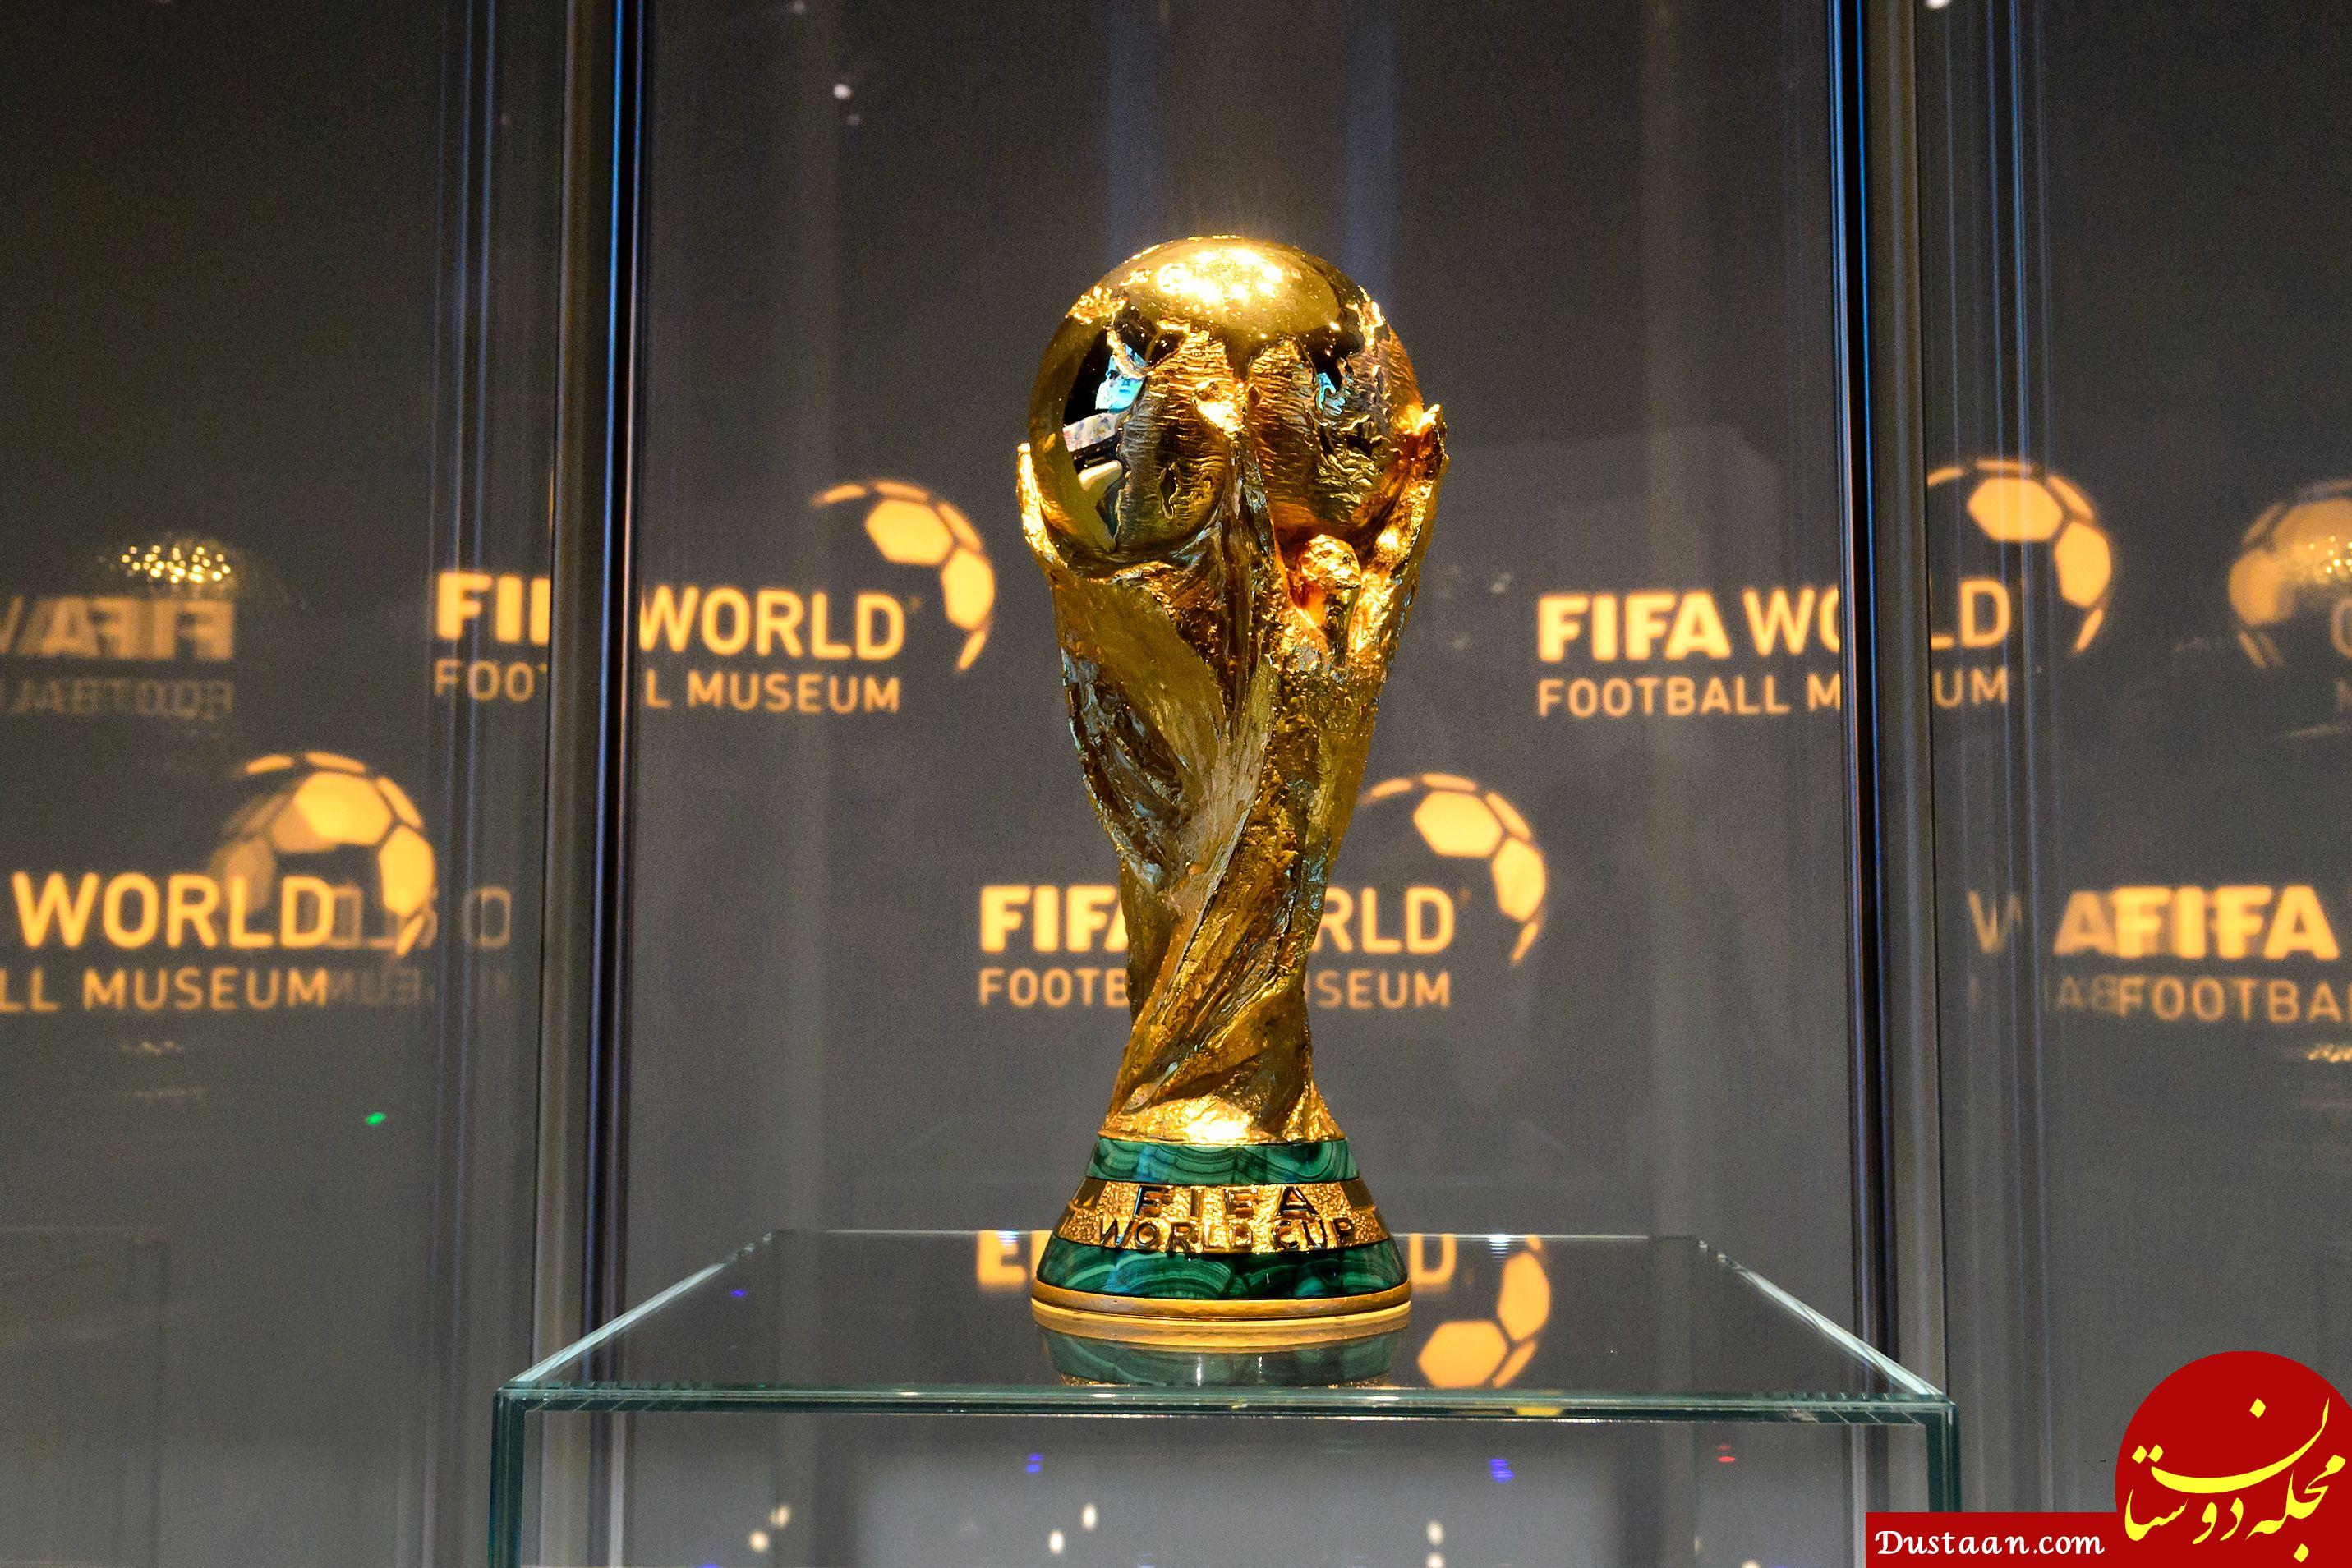 https://www.tarafdari.com/sites/default/files/contents/user6984/news/fifa_world_cup.jpg